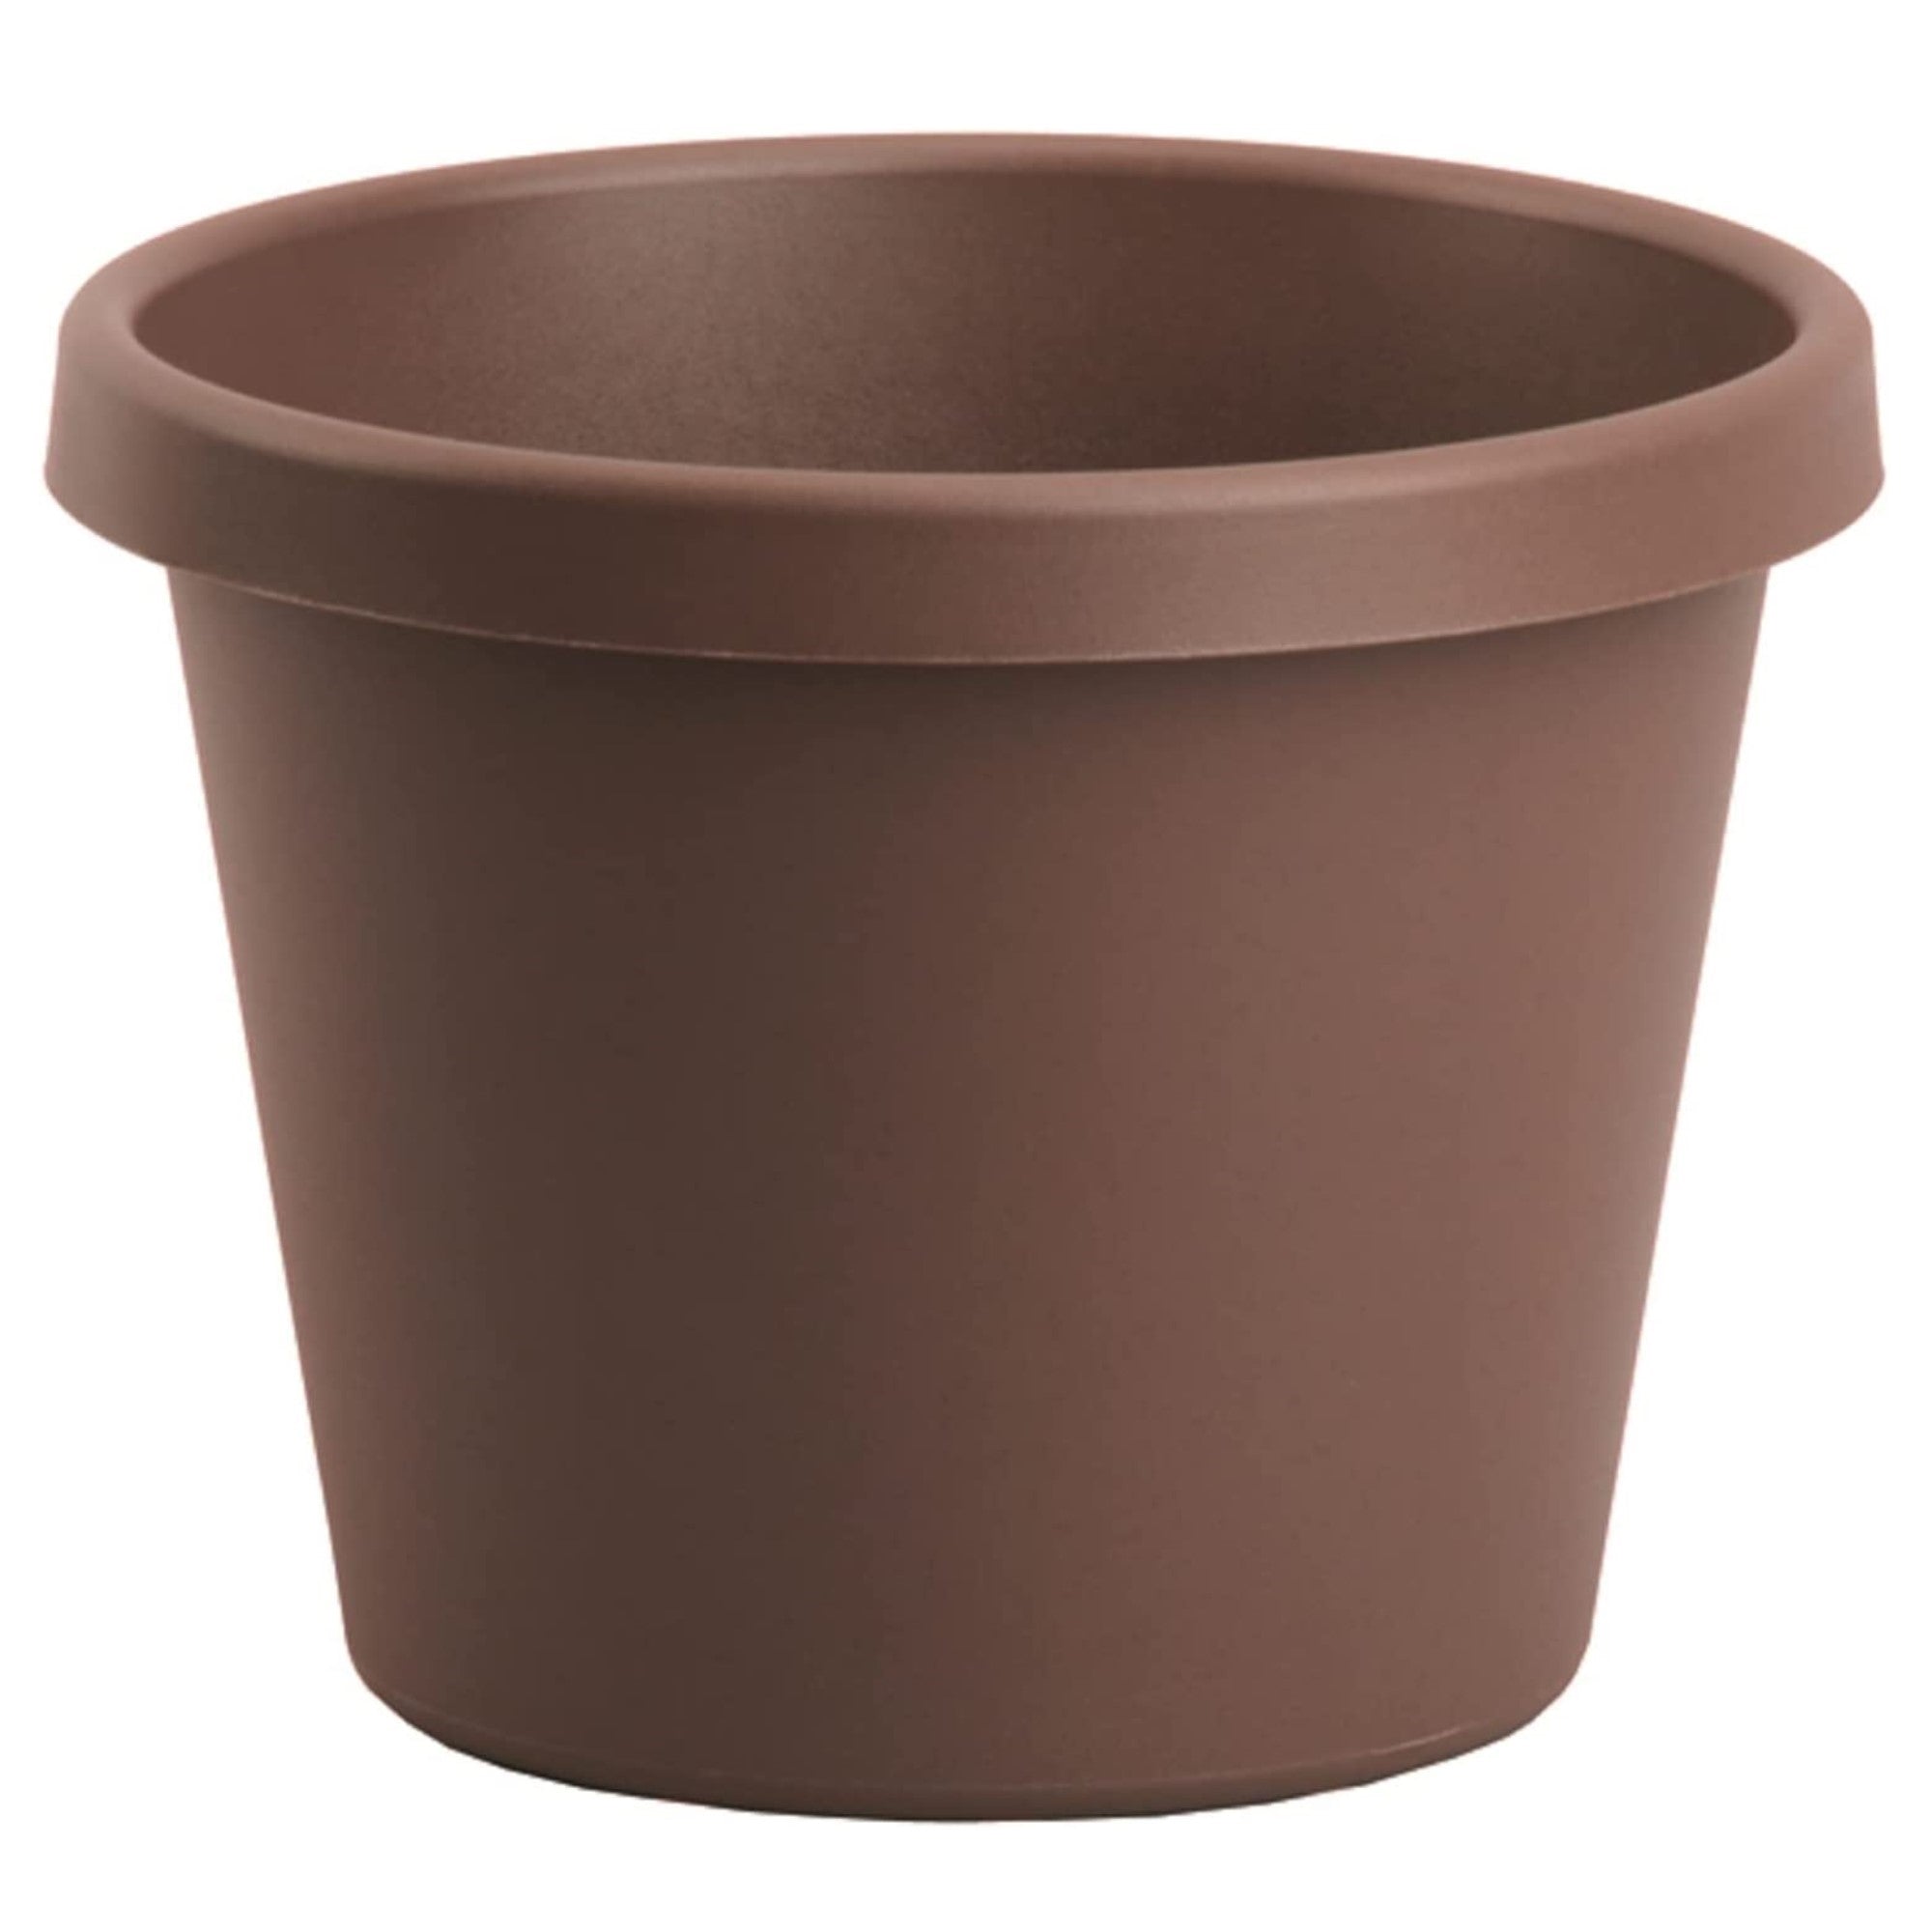 Bloem Terra Plastic Round Pot Planter, Chocolate